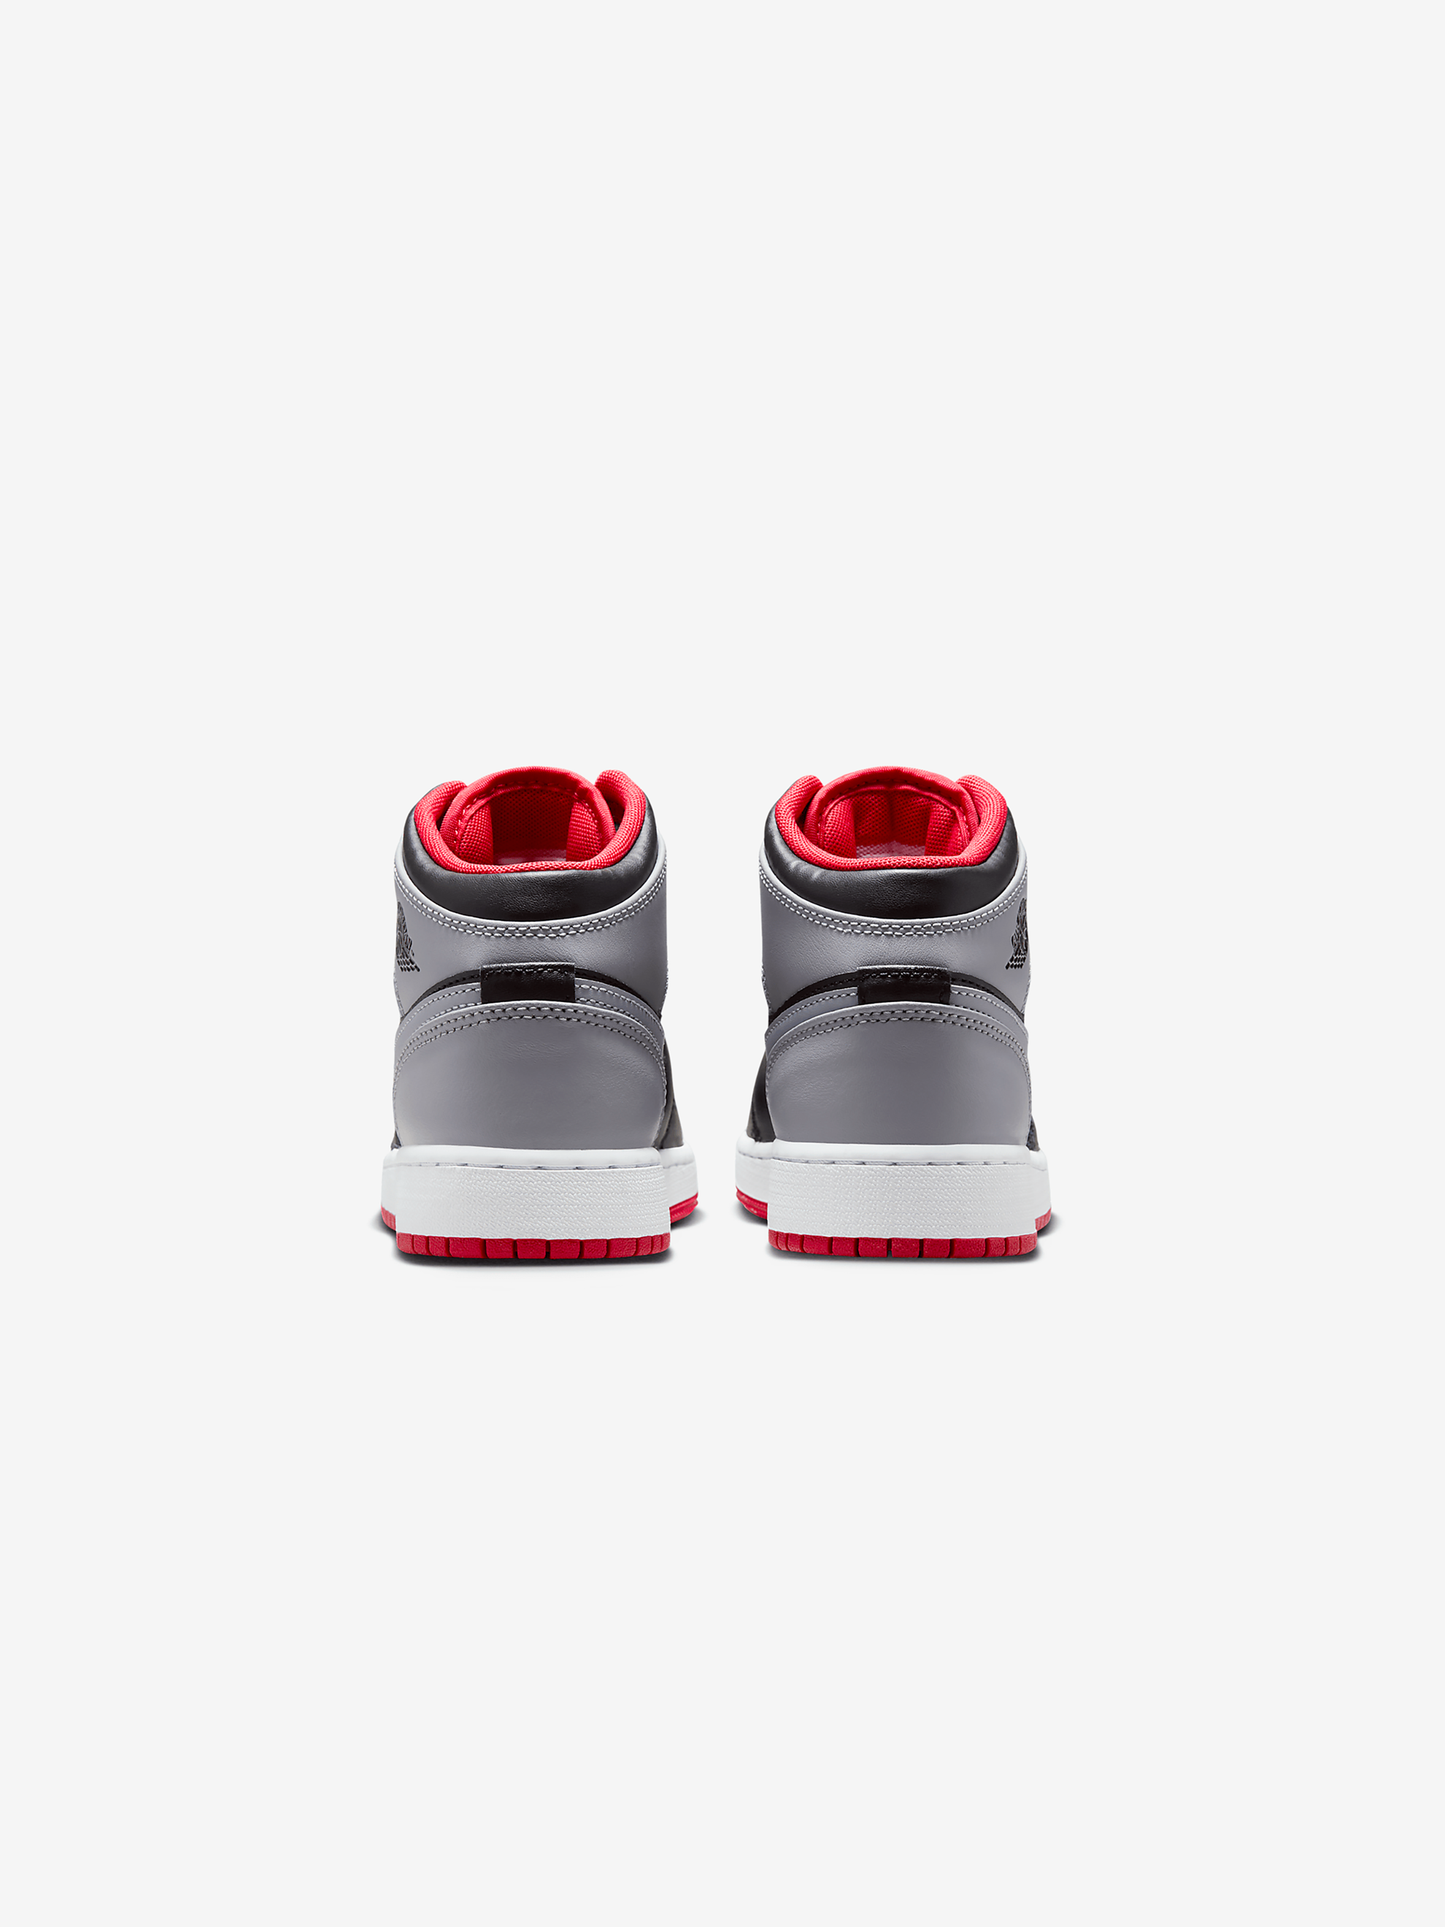 GS Air Jordan 1 Mid (Black/Cement Grey/Fire Red/White)